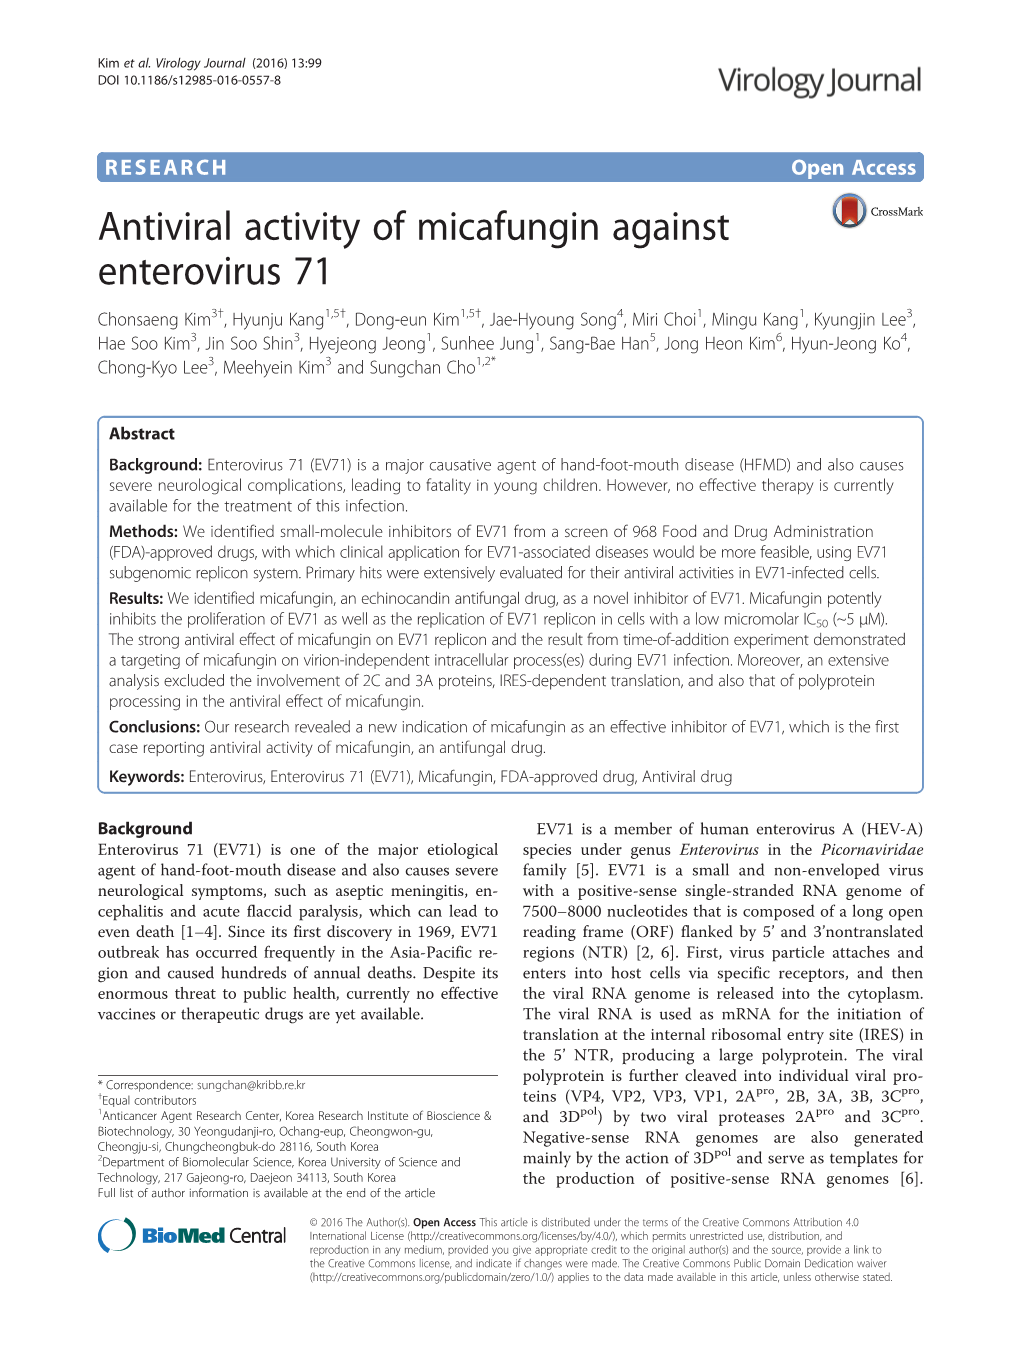 Antiviral Activity of Micafungin Against Enterovirus 71